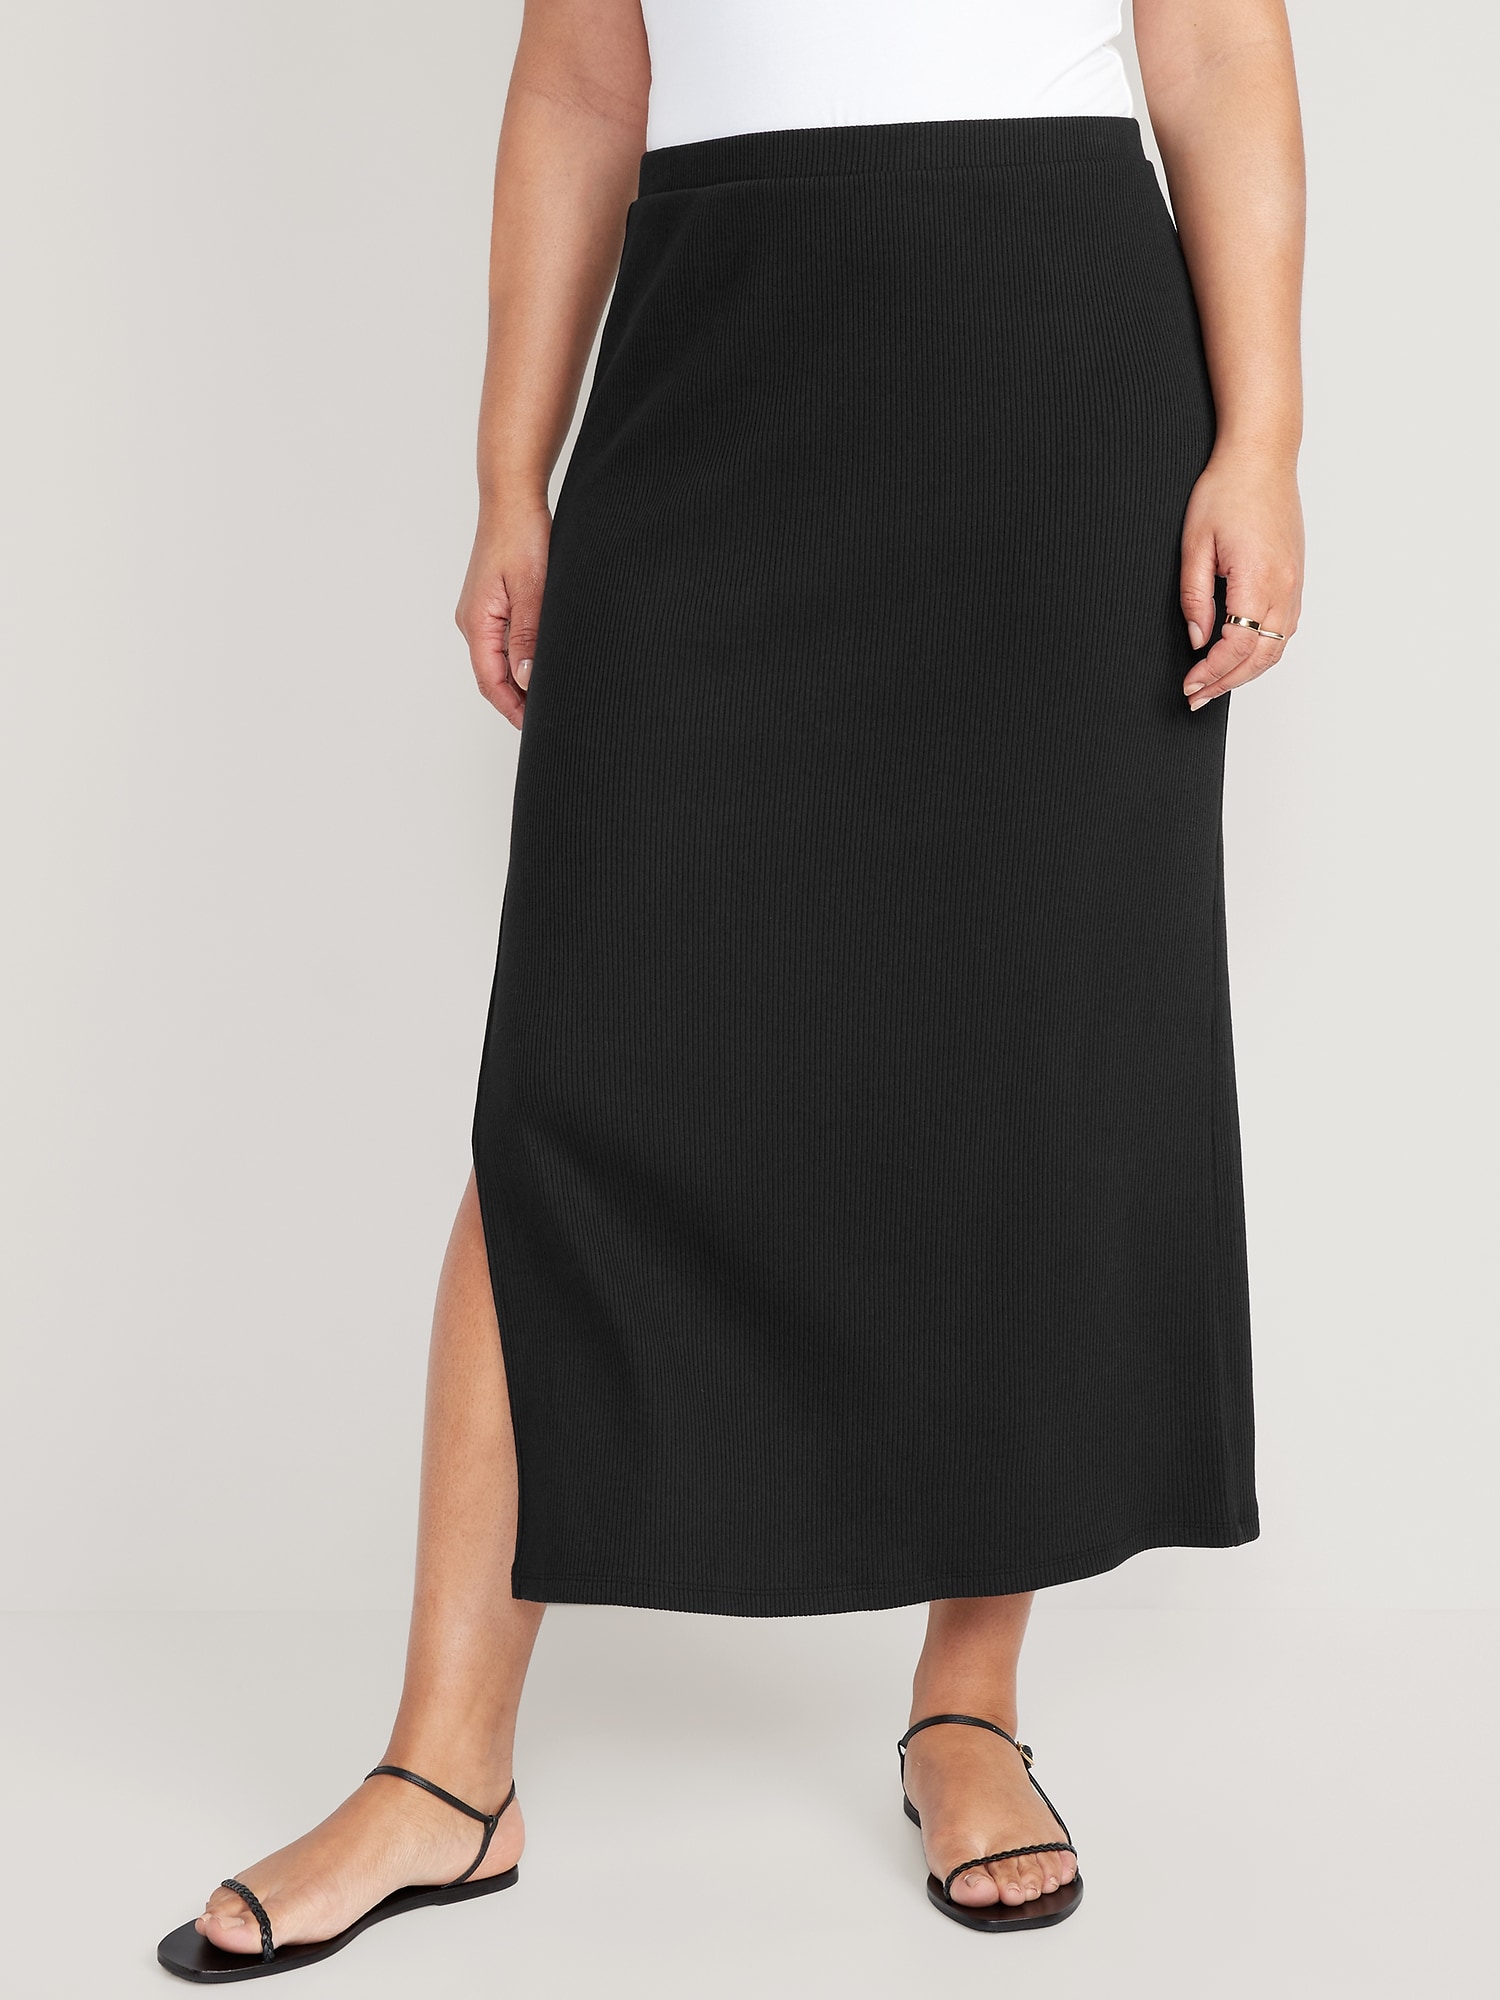 Cute Black Knit Skirt - High-Waisted Skirt - Black Circle Skirt